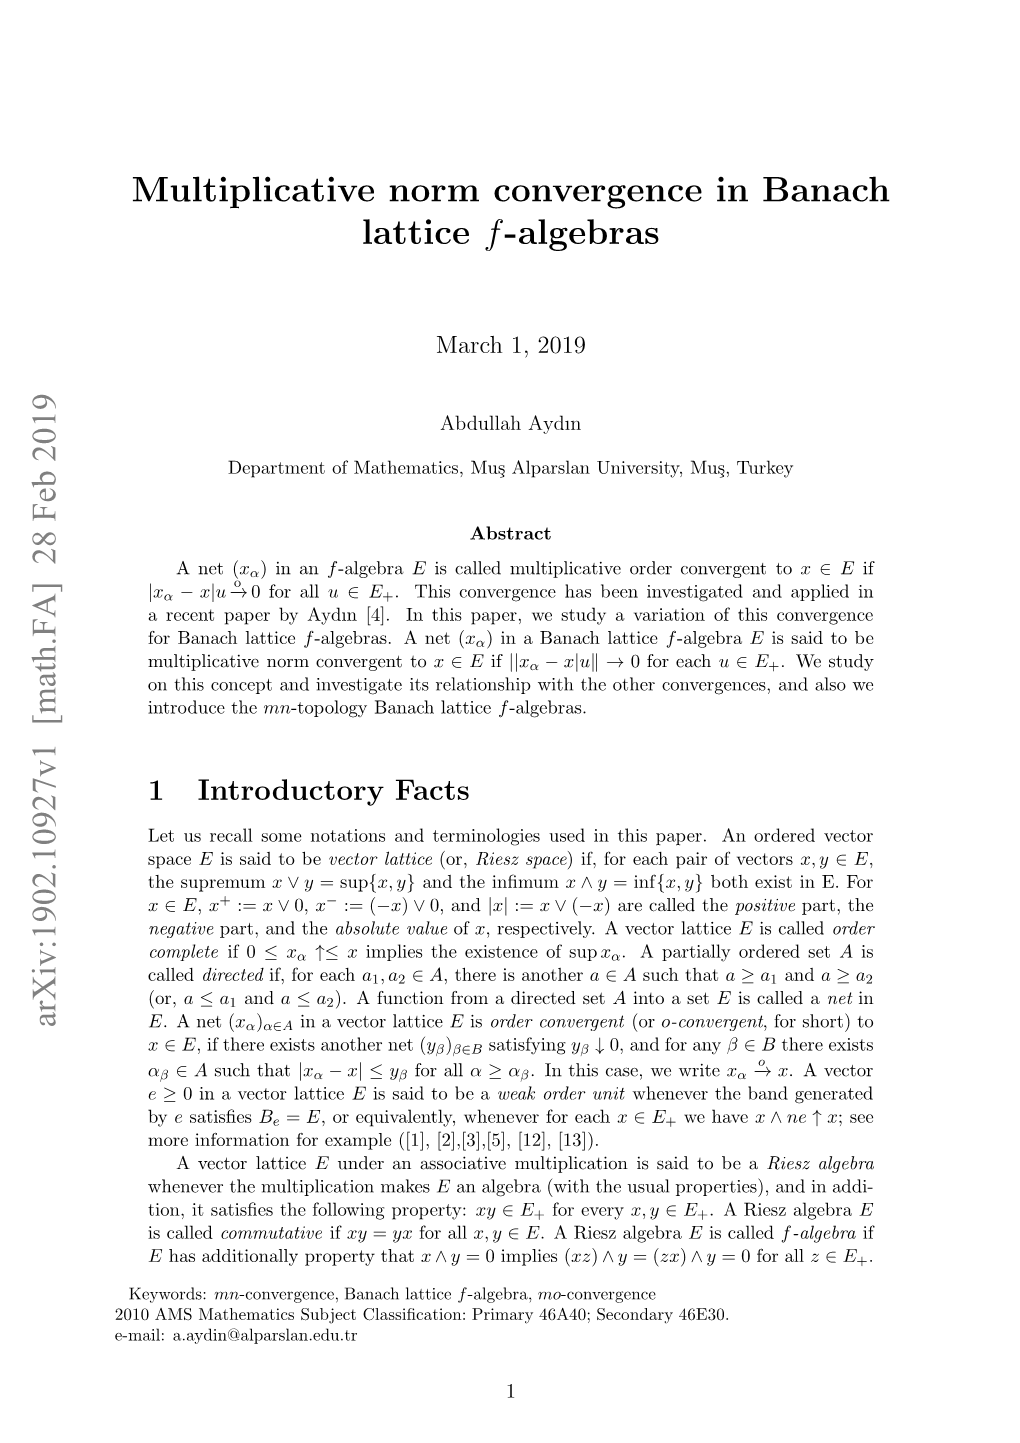 Multiplicative Norm Convergence in Banach Lattice F-Algebras